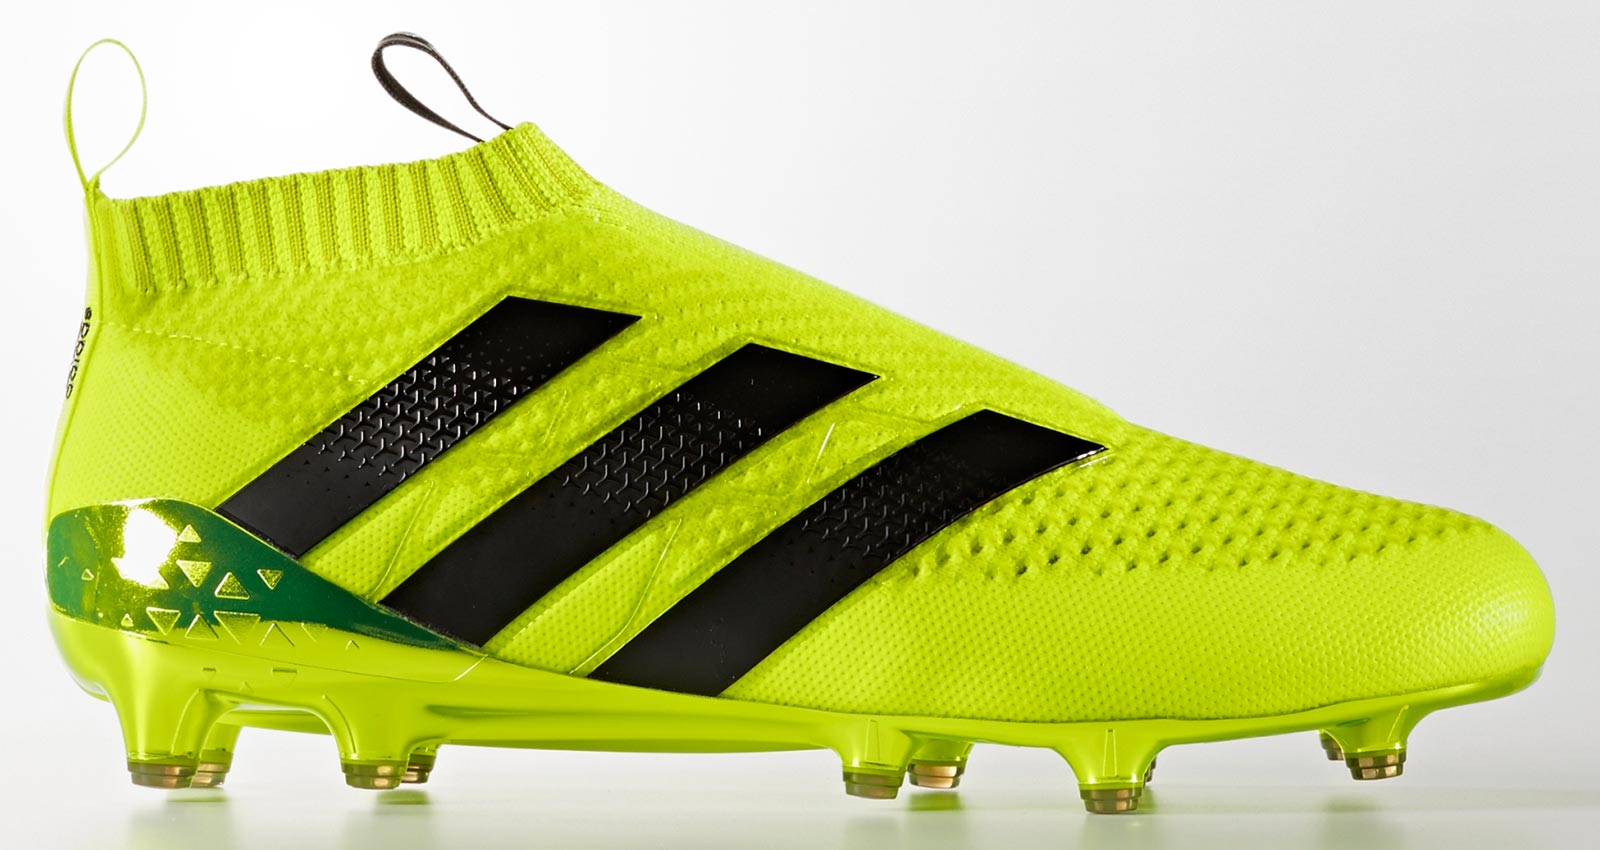 Купить бутсы без шнурков. Adidas Football Boots 2022. Adidas Ace 16+. Футбольные бутсы adidas f50 желтые. Adidas purecontrol16+.